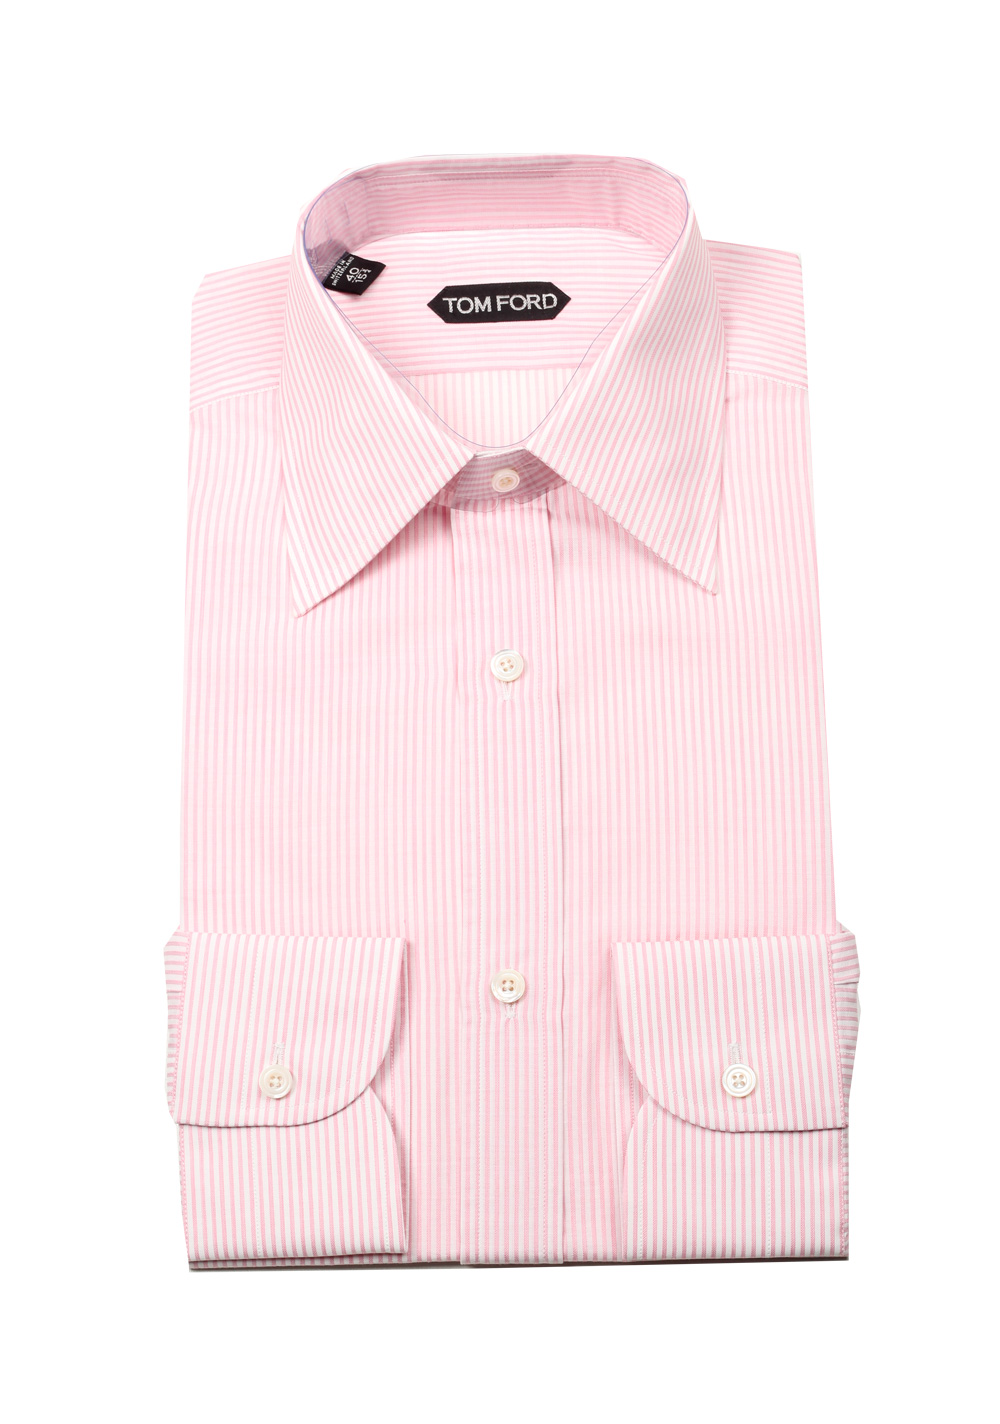 TOM FORD Striped White Pink Dress Shirt Size 40 / 15,75 U.S. | Costume Limité